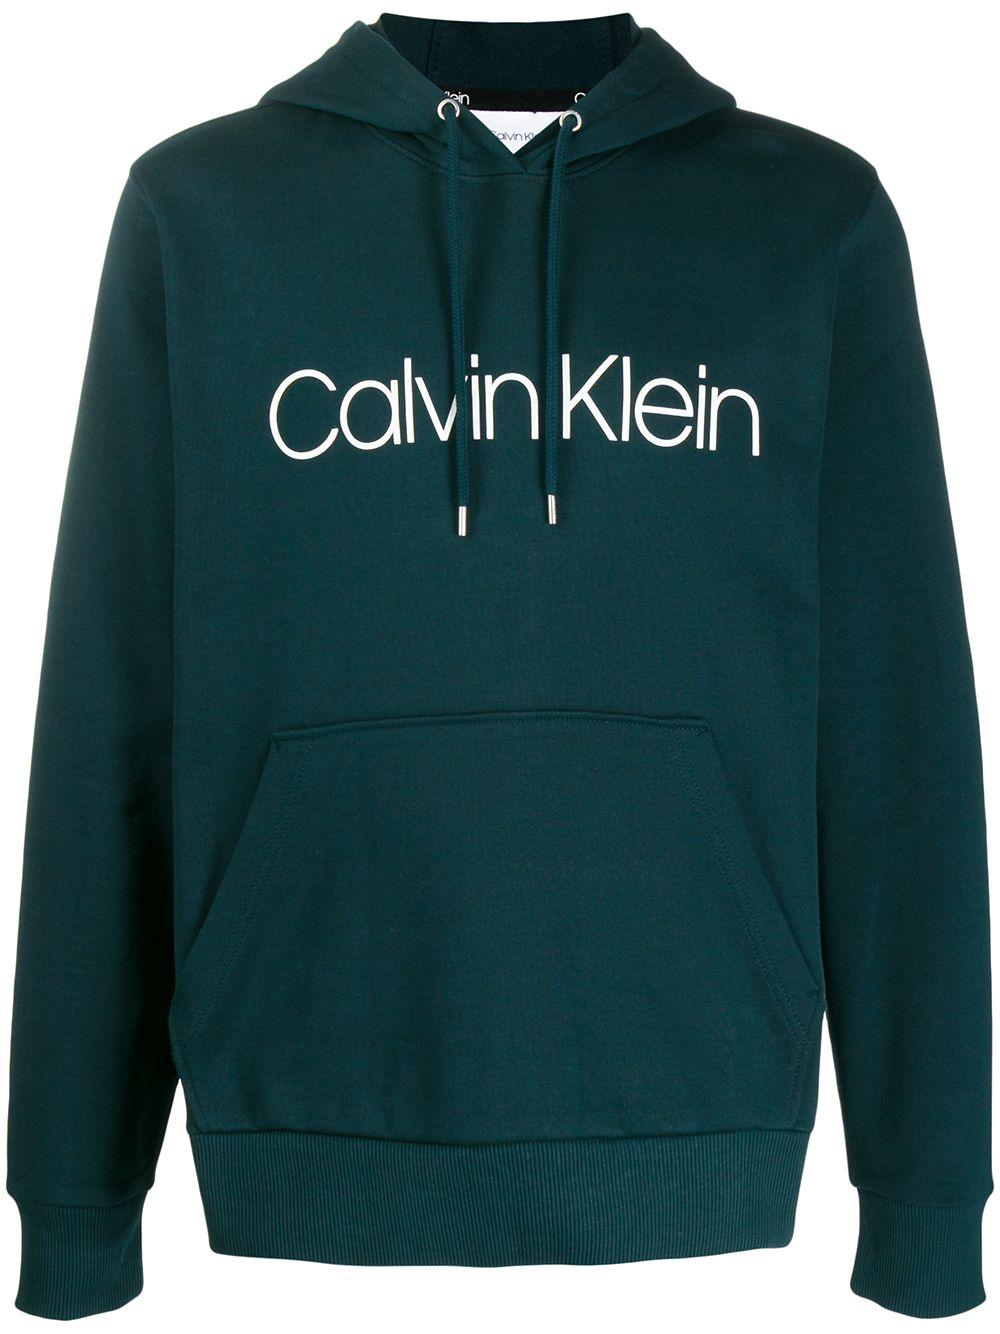 Calvin Klein Cotton Printed Logo Hoodie in Green for Men - Lyst